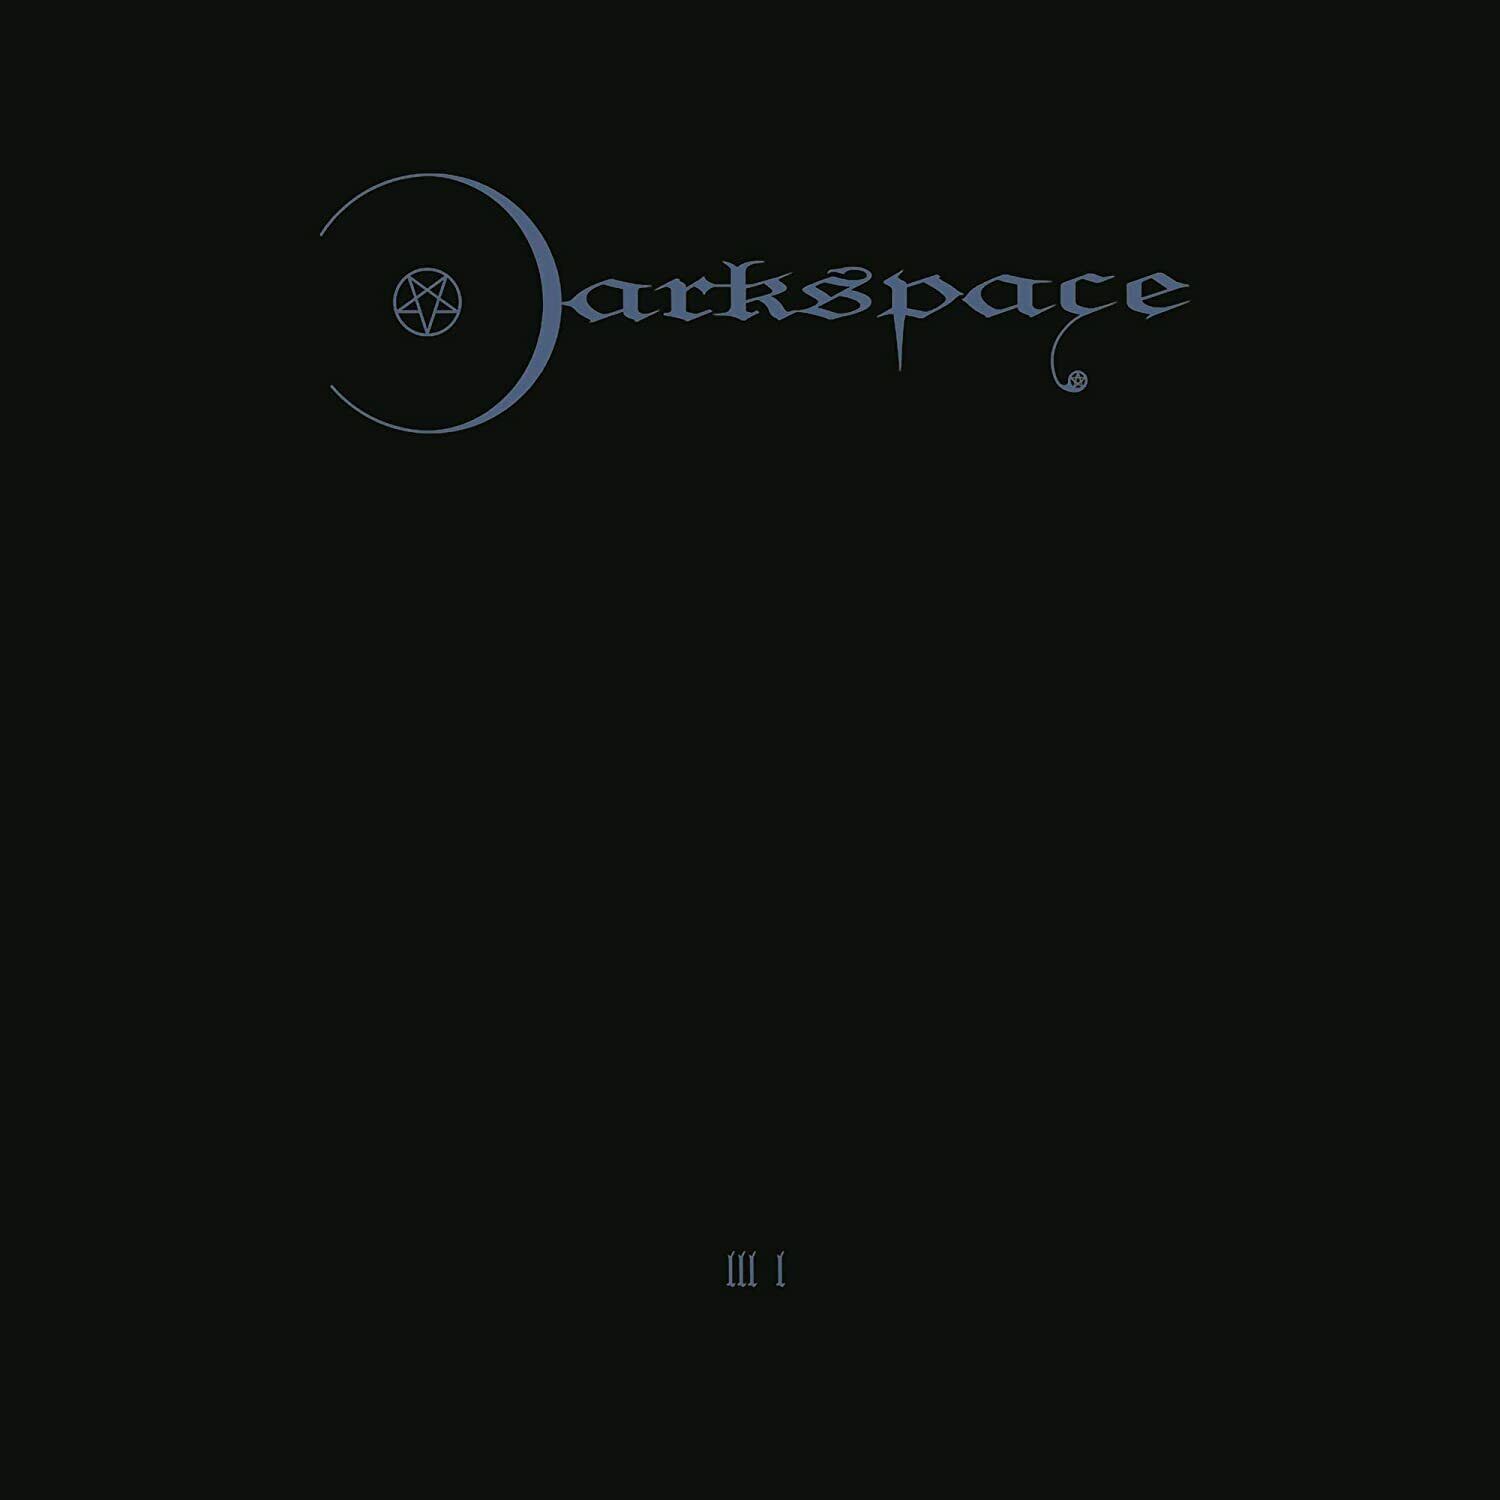 DARKSPACE - Dark Space III I [DIGIPAK CD]